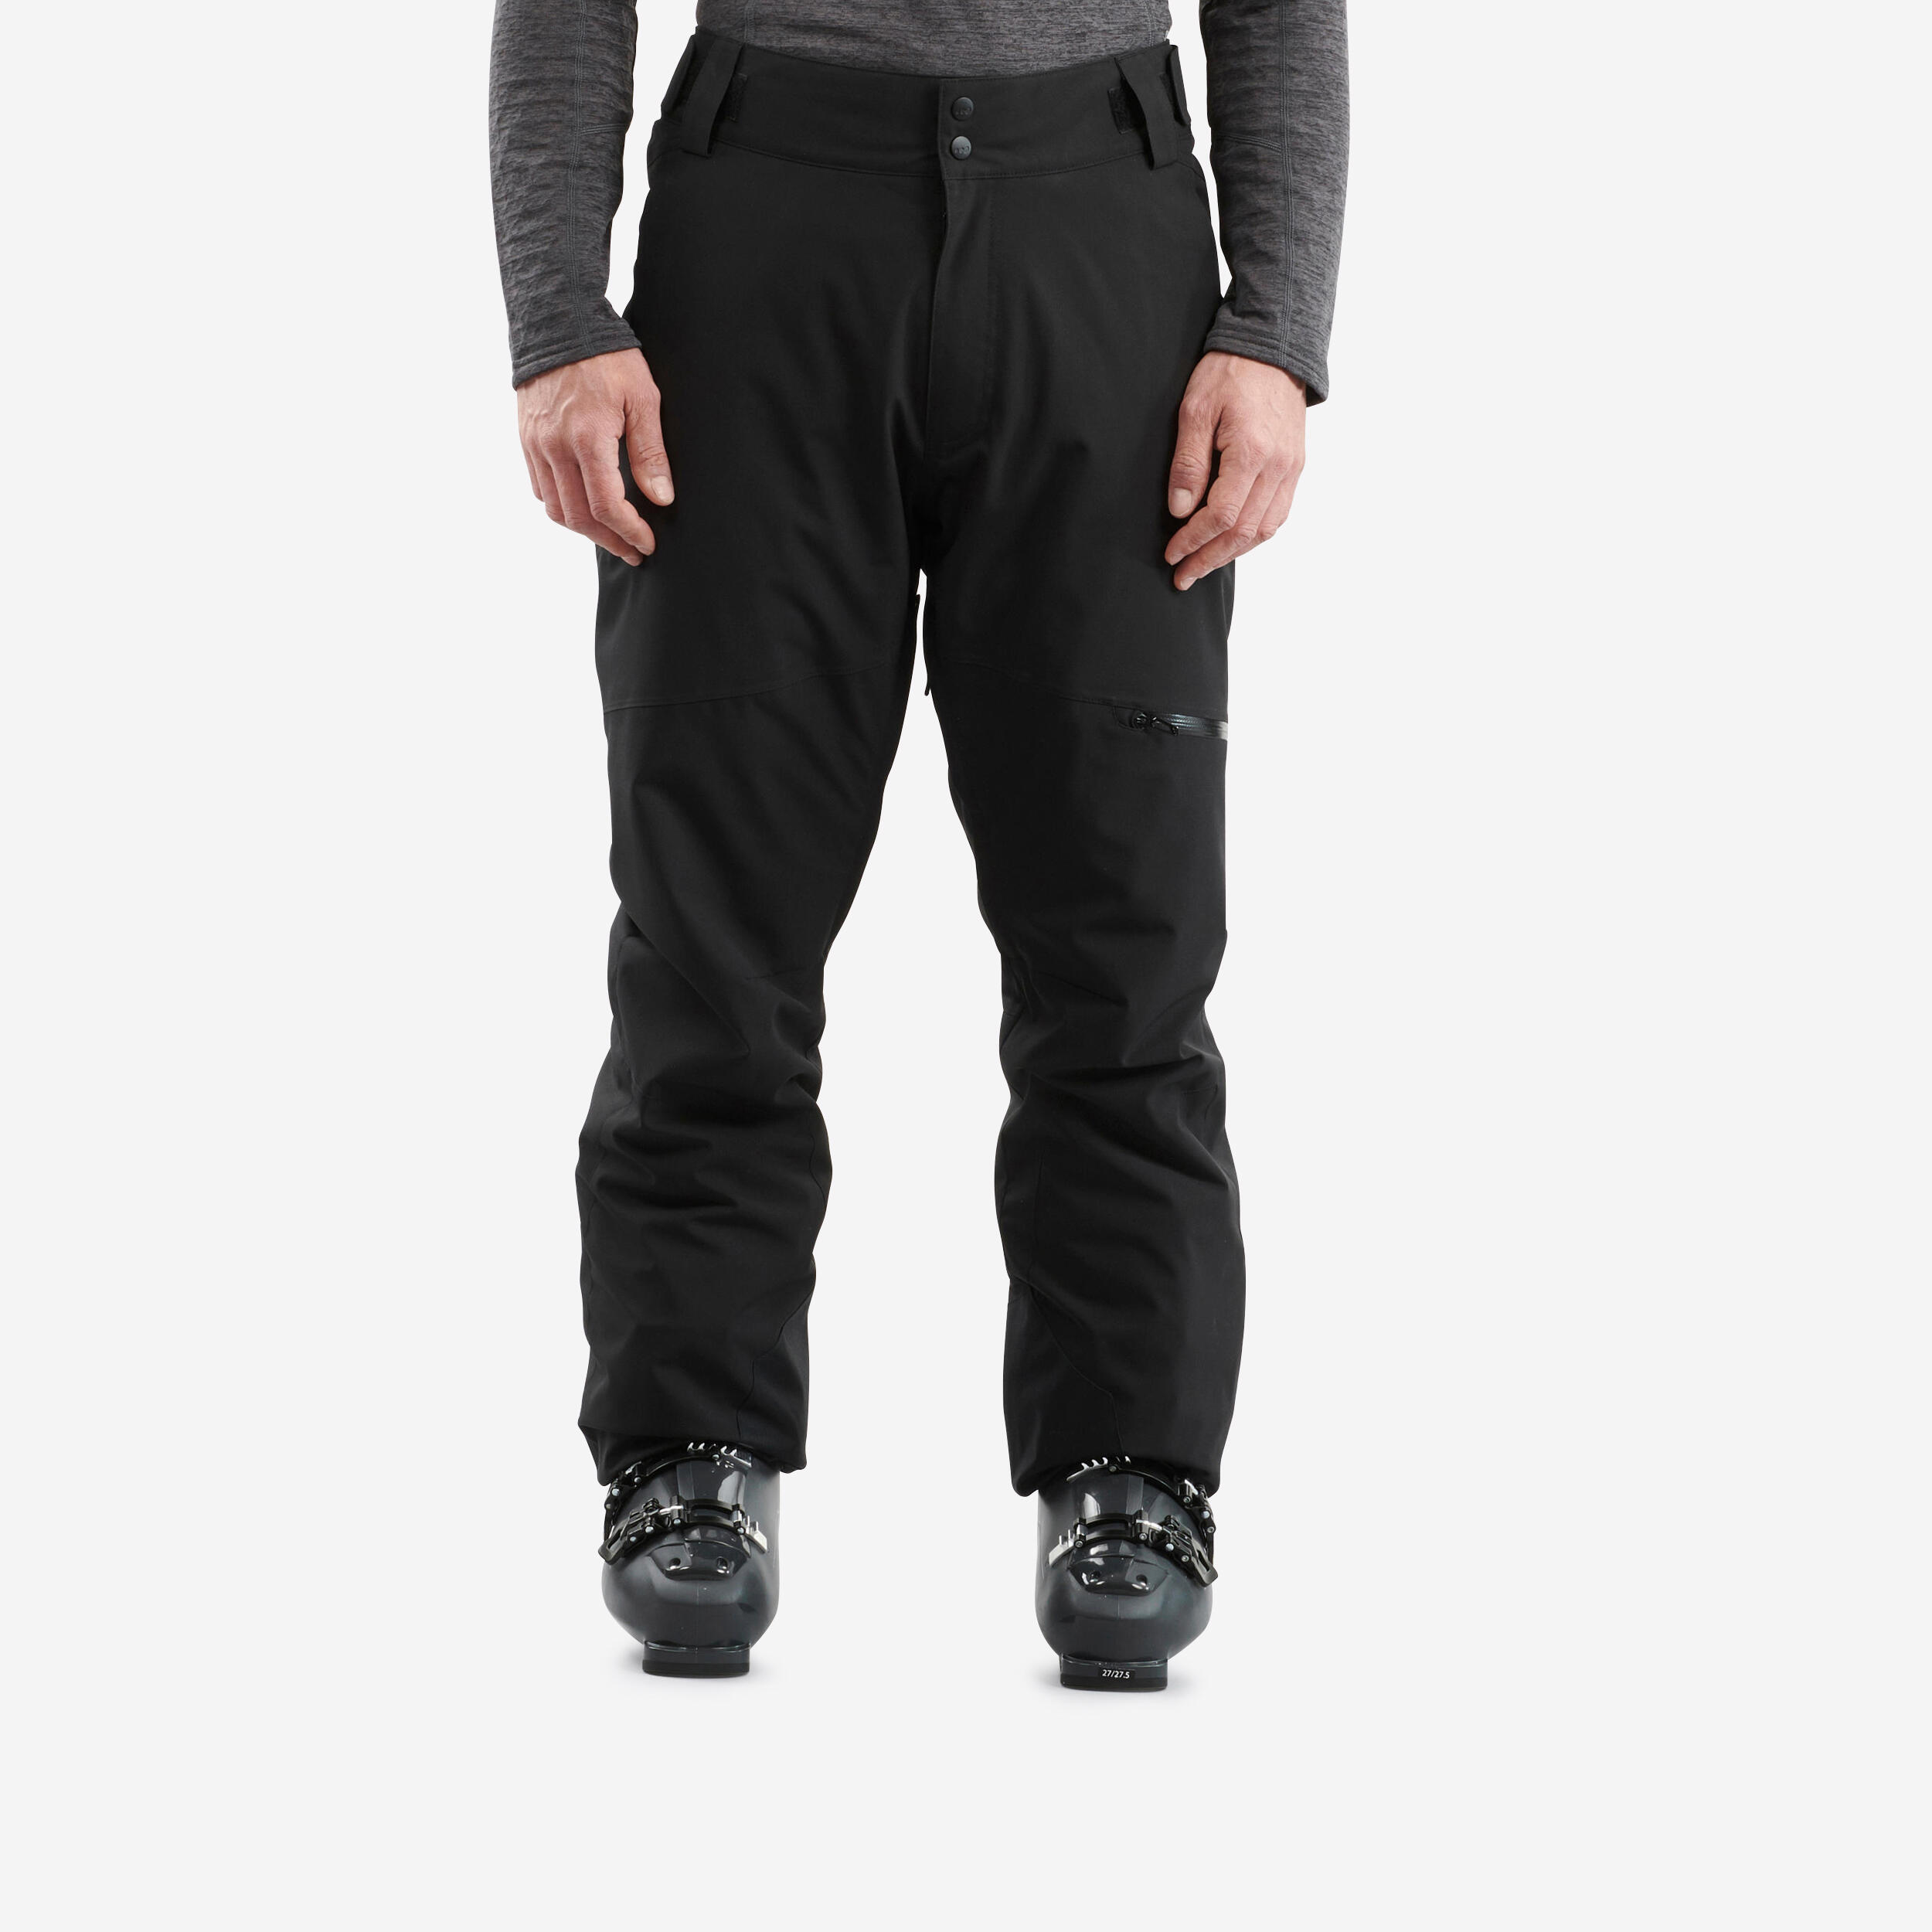 WEDZE Men’s Warm Ski Trousers Regular 500 - Black